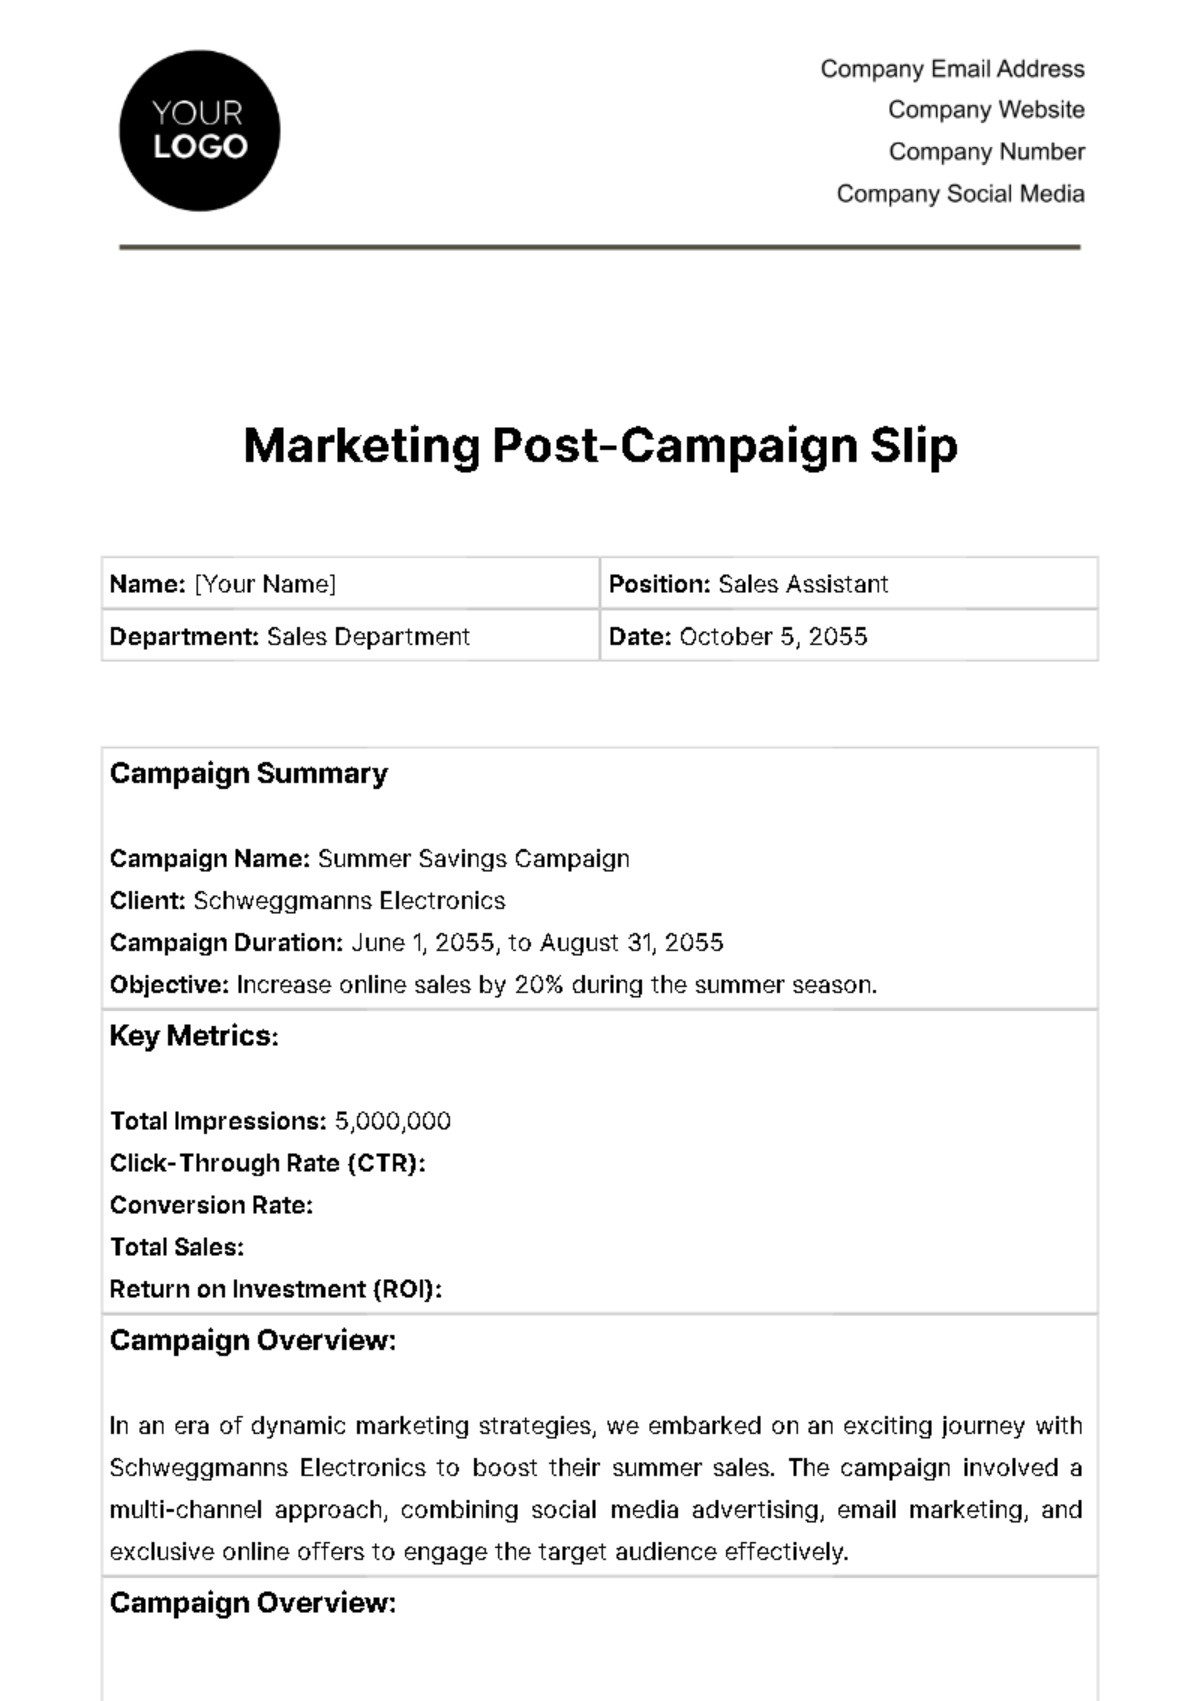 Marketing Post-Campaign Slip Template